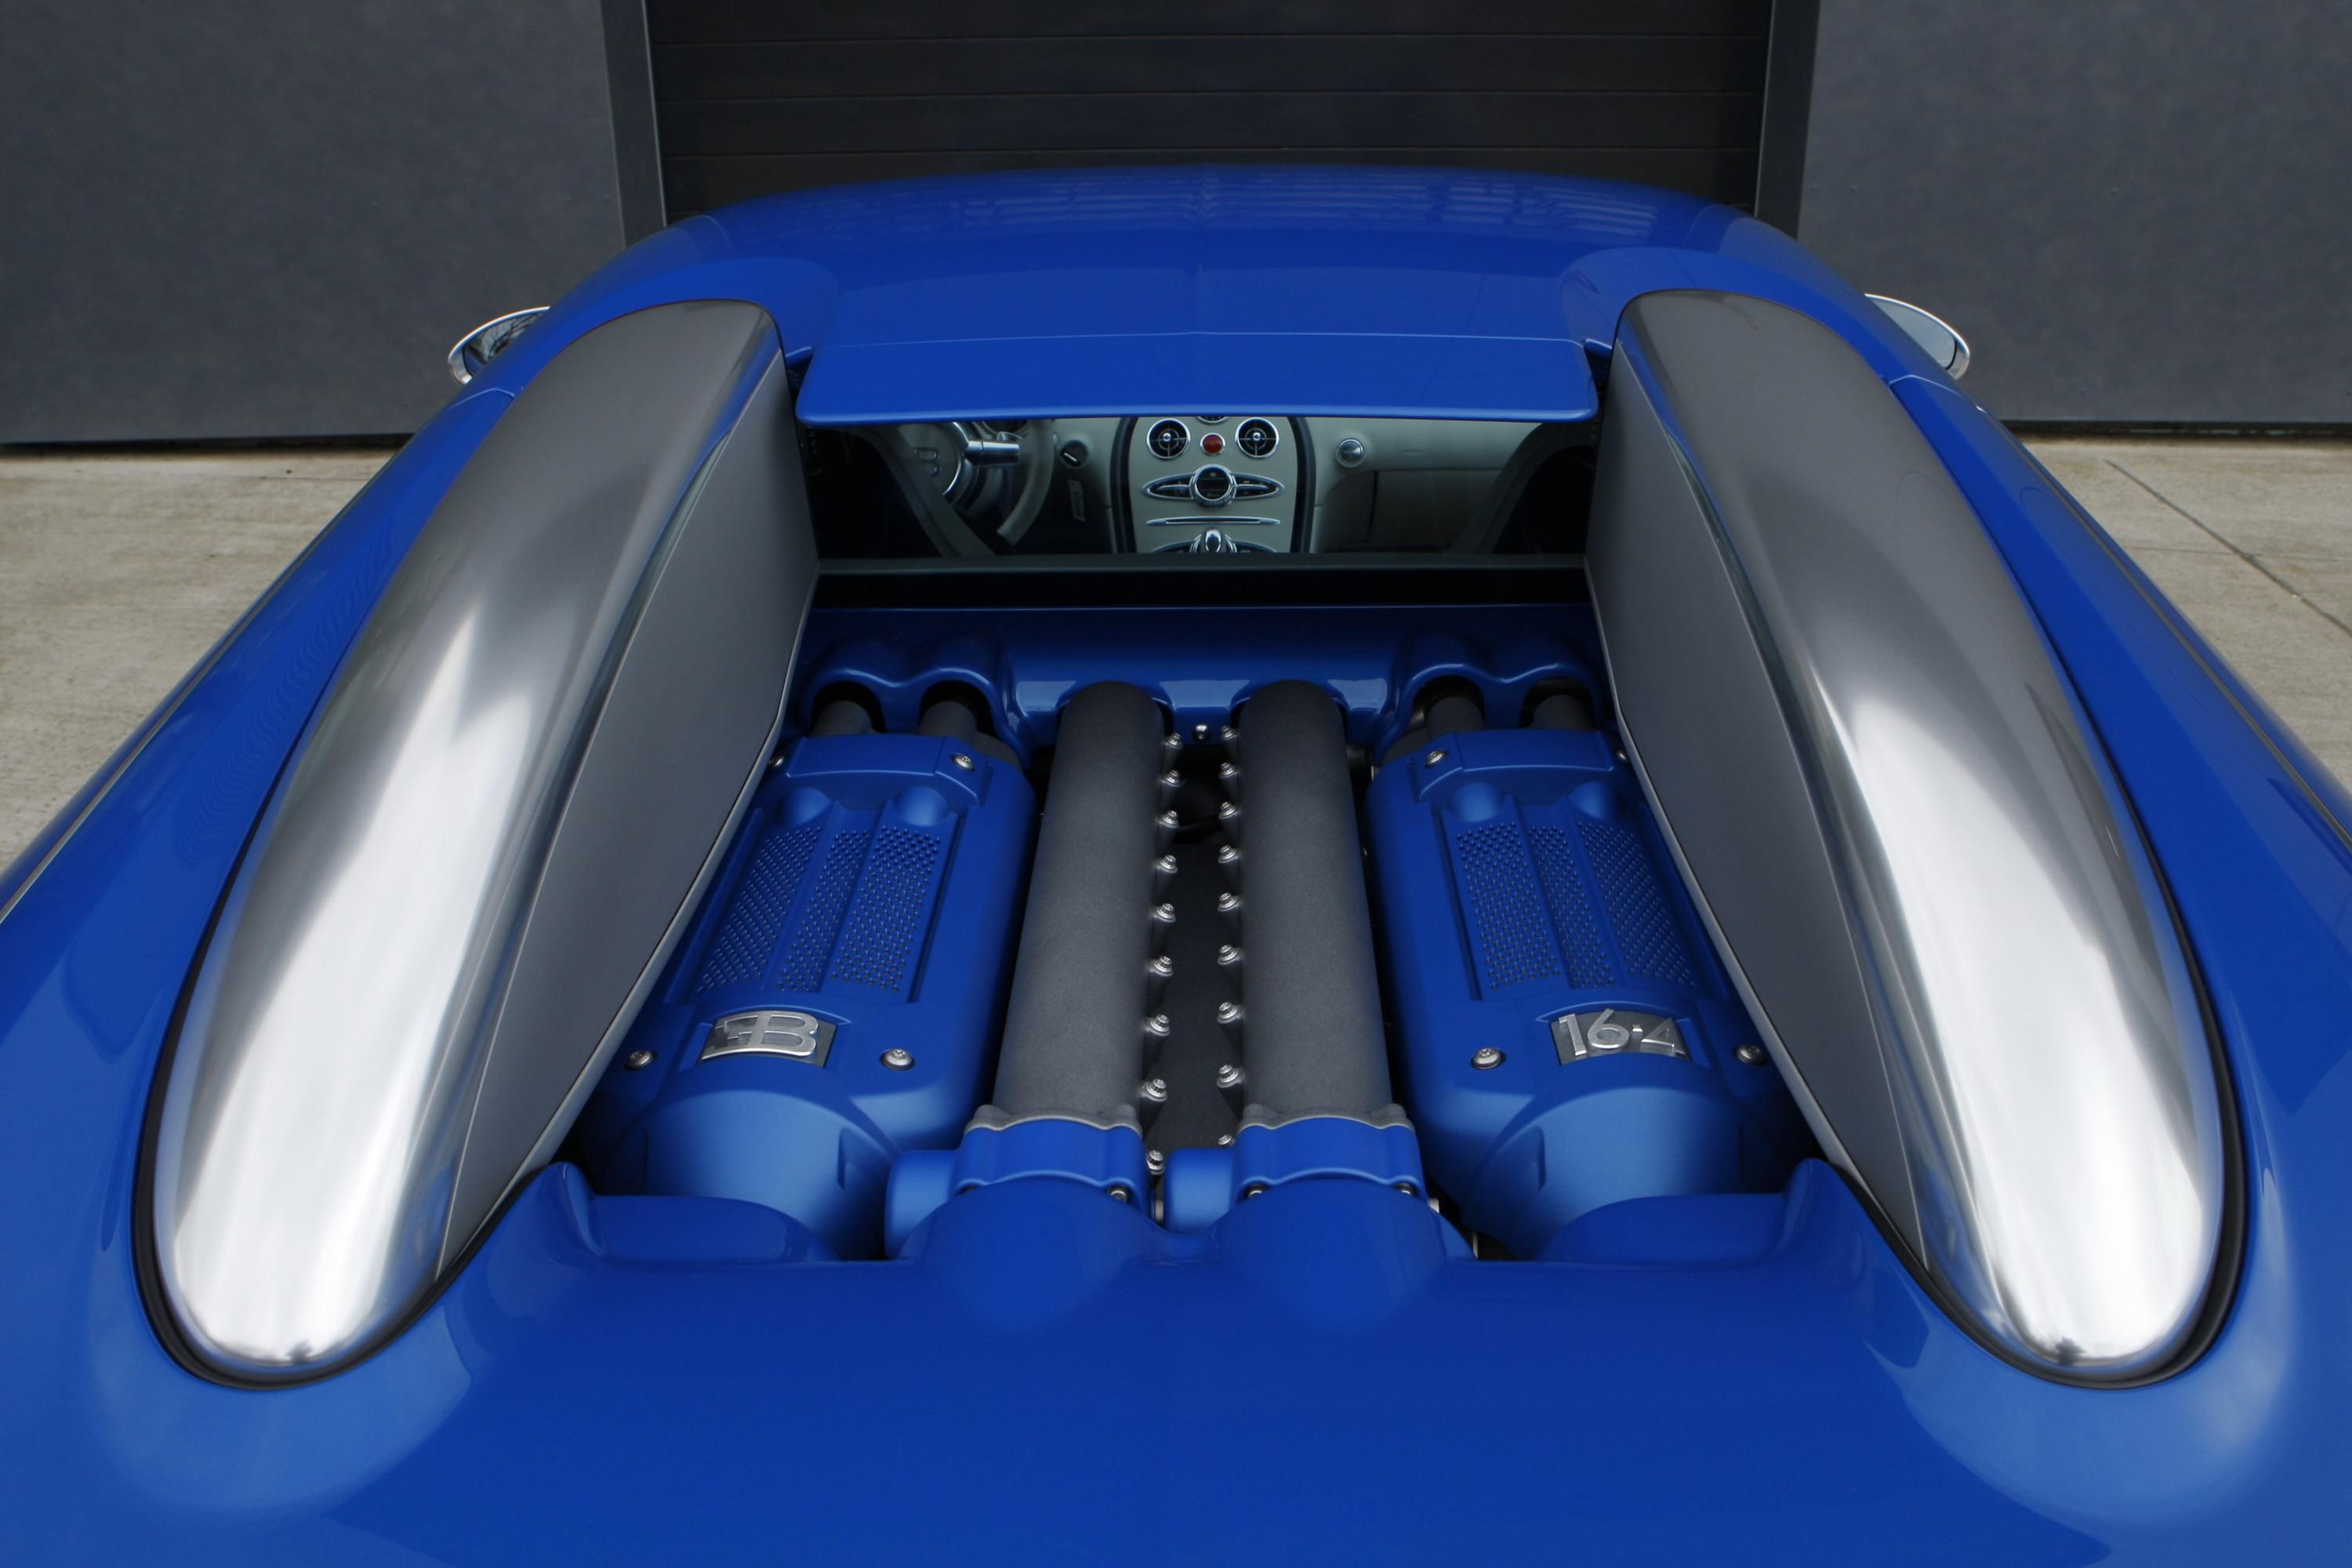 2010 Bugatti Veyron Bleu Centenaire